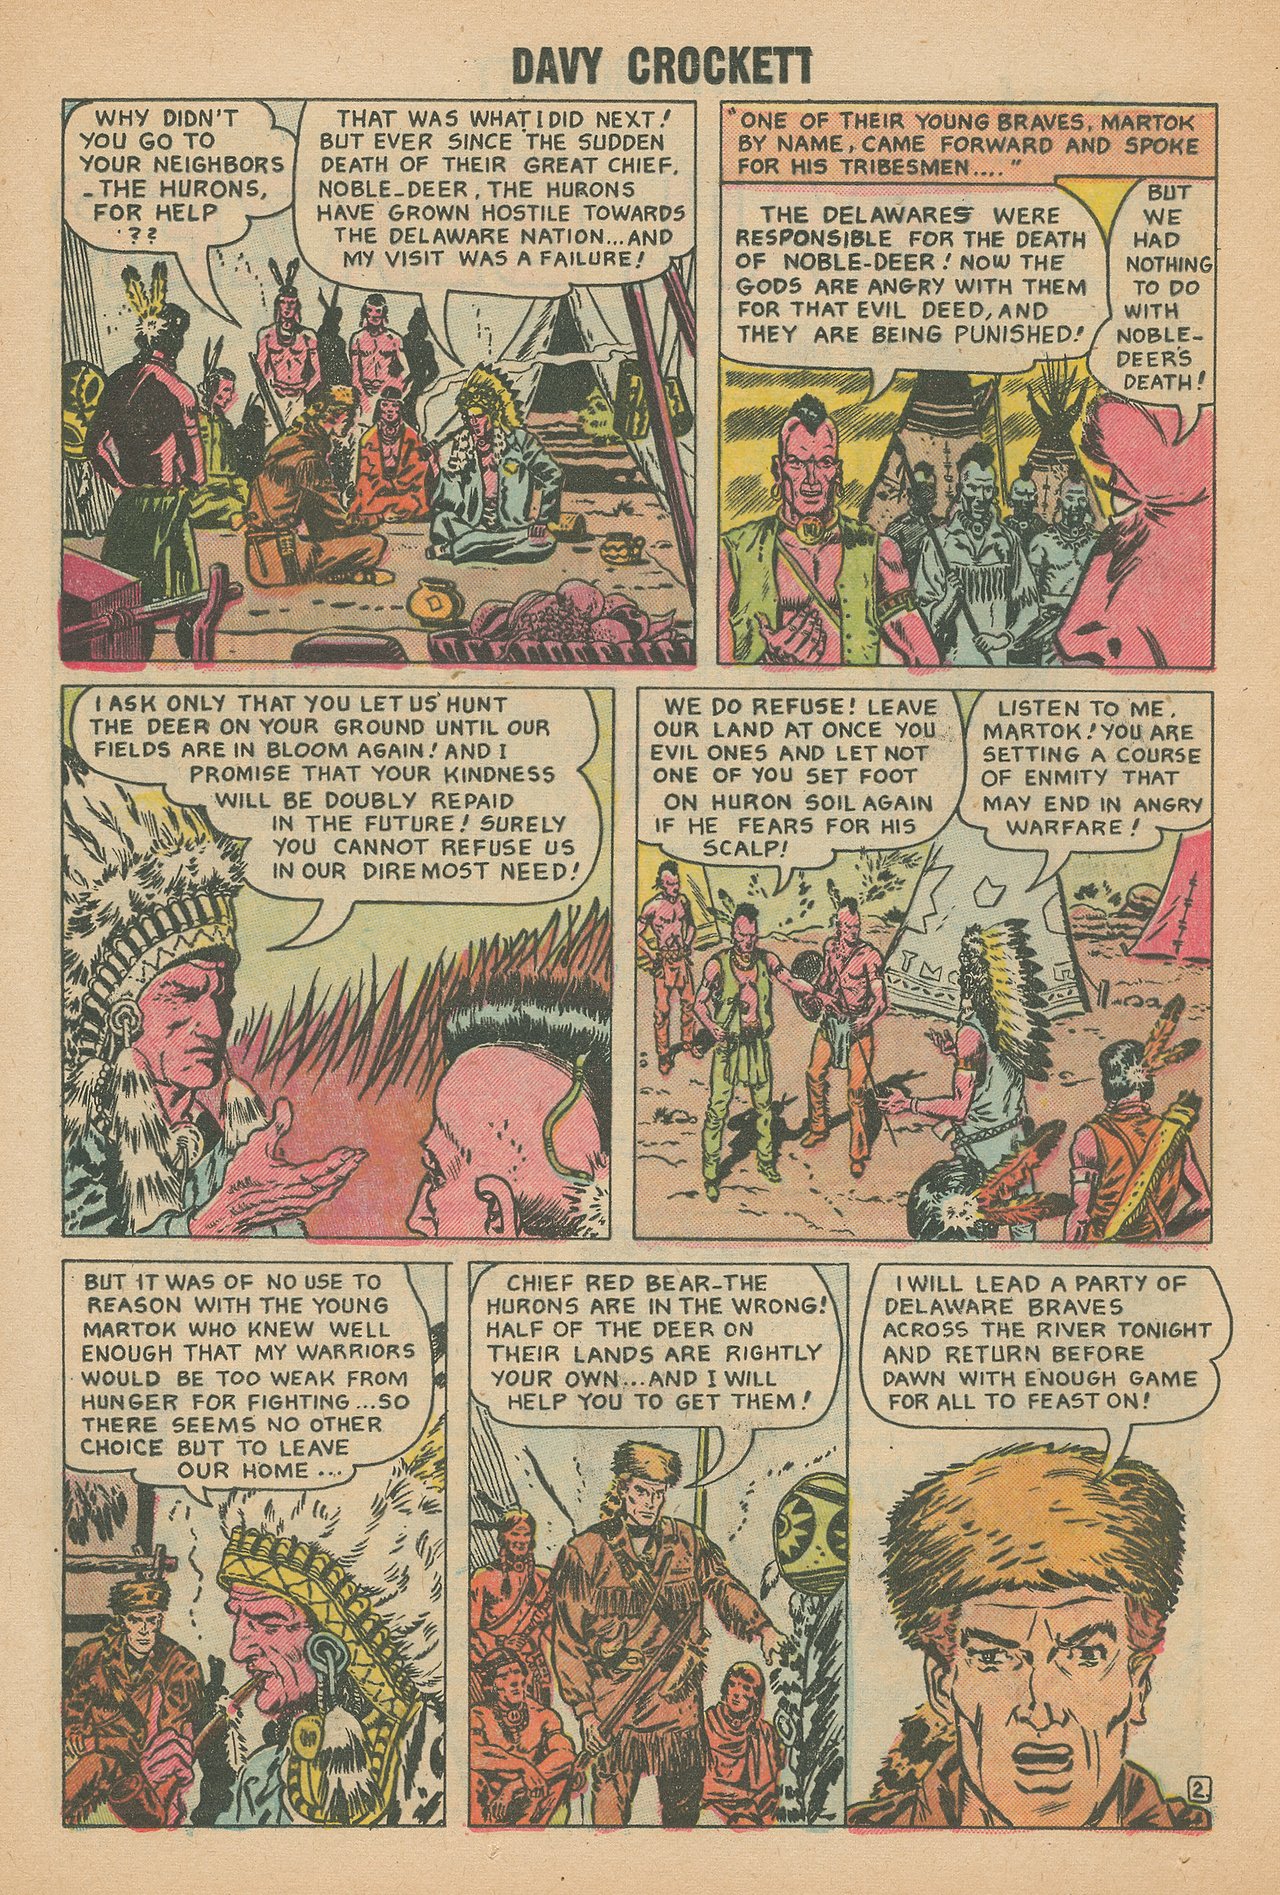 Read online Davy Crockett comic -  Issue #2 - 24